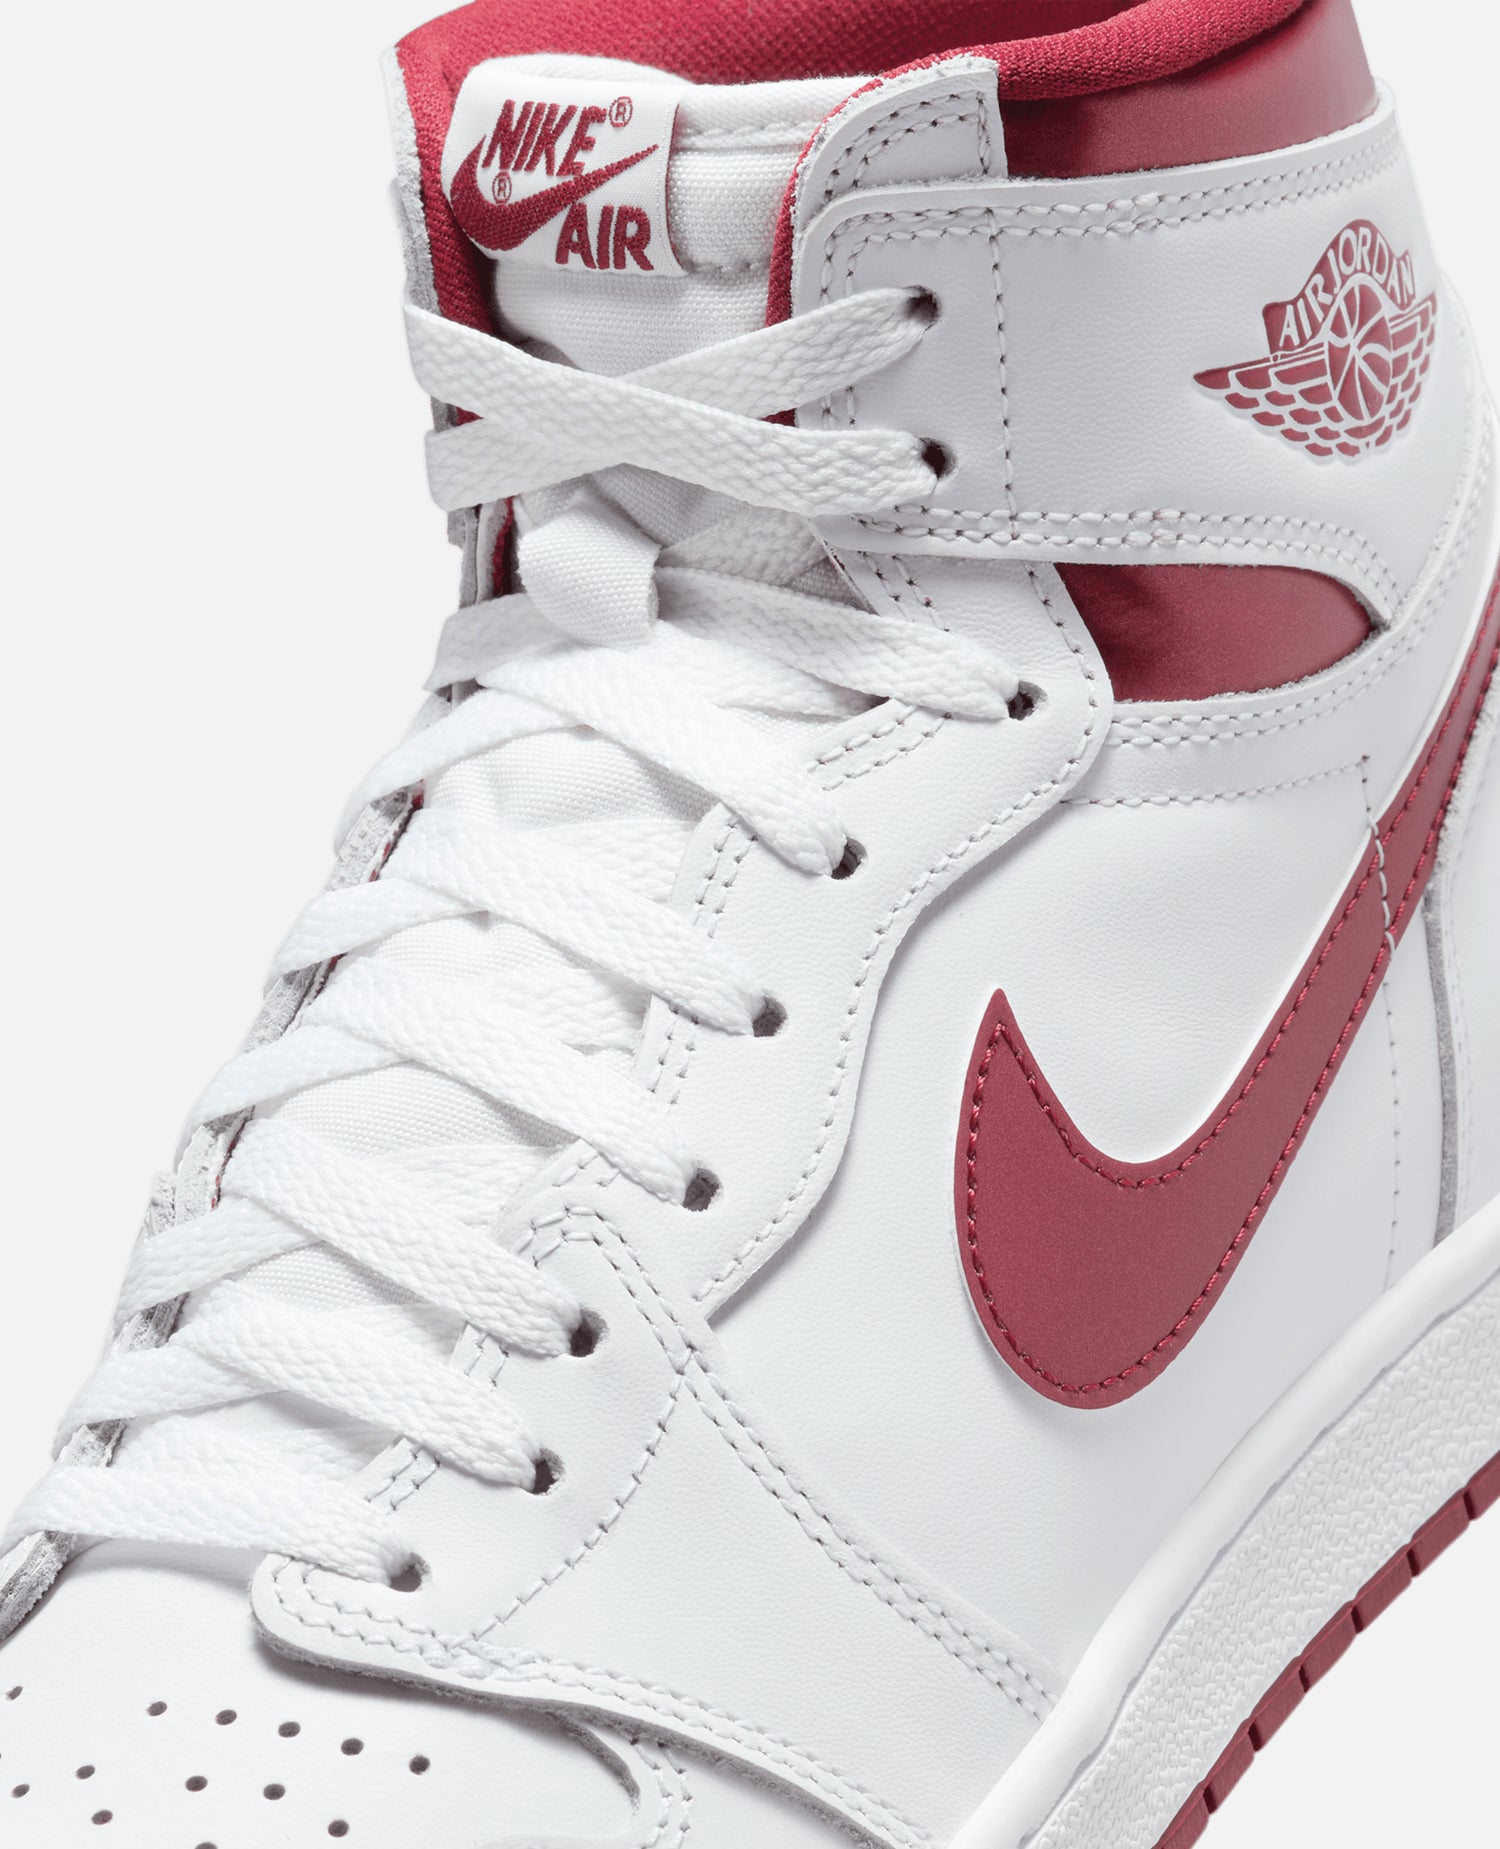 Nike Air Jordan 1 Hi 85 (White/Team Red-White)